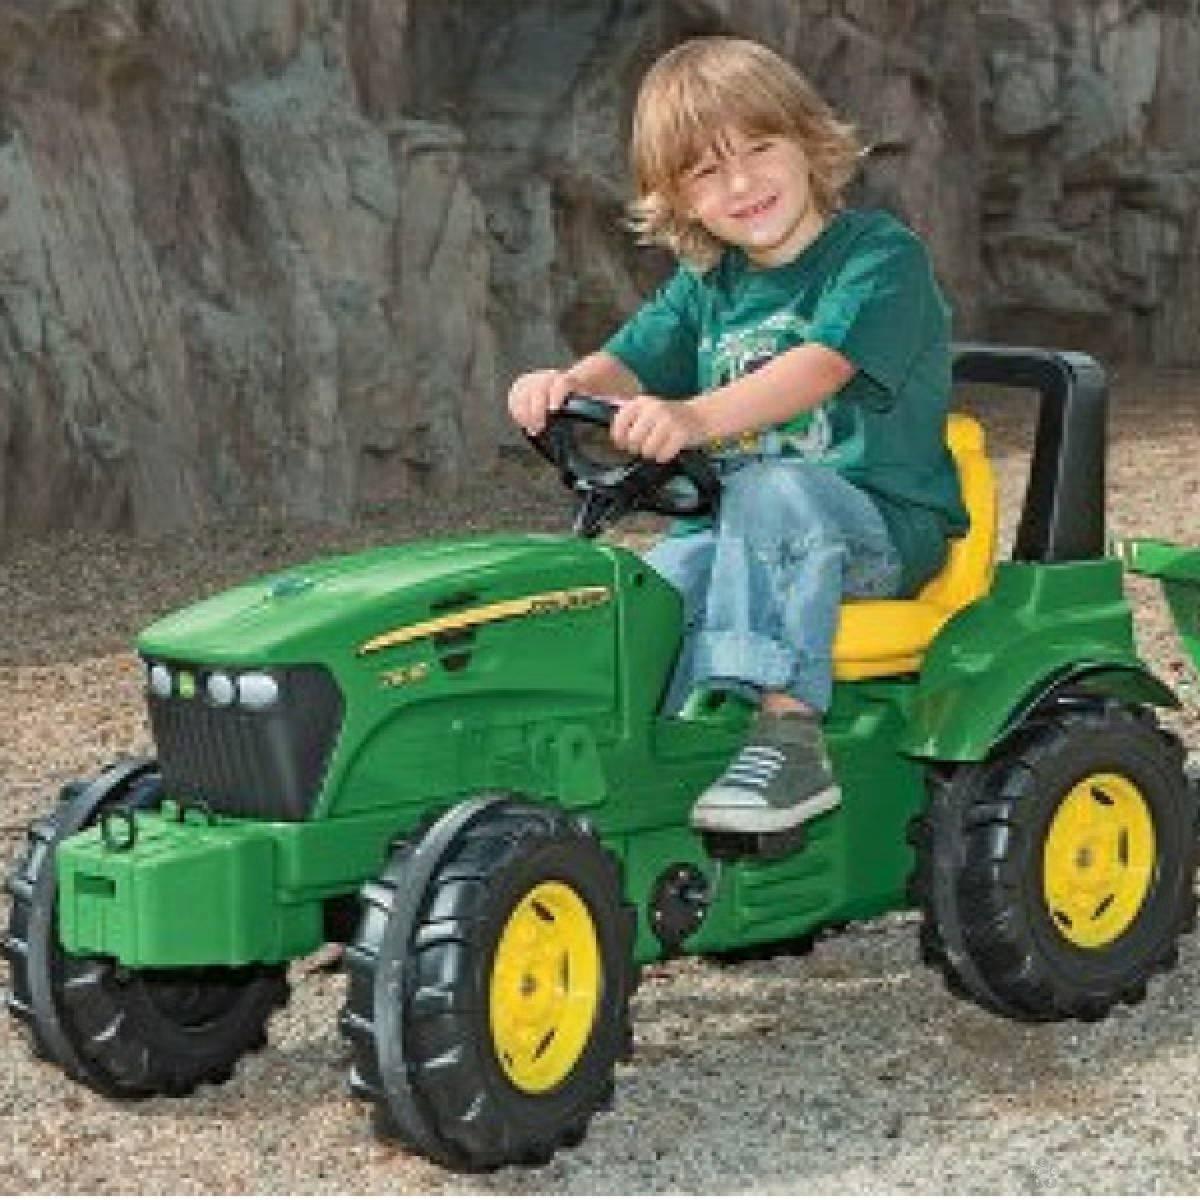 Traktor Farm track JD 7930 700028 